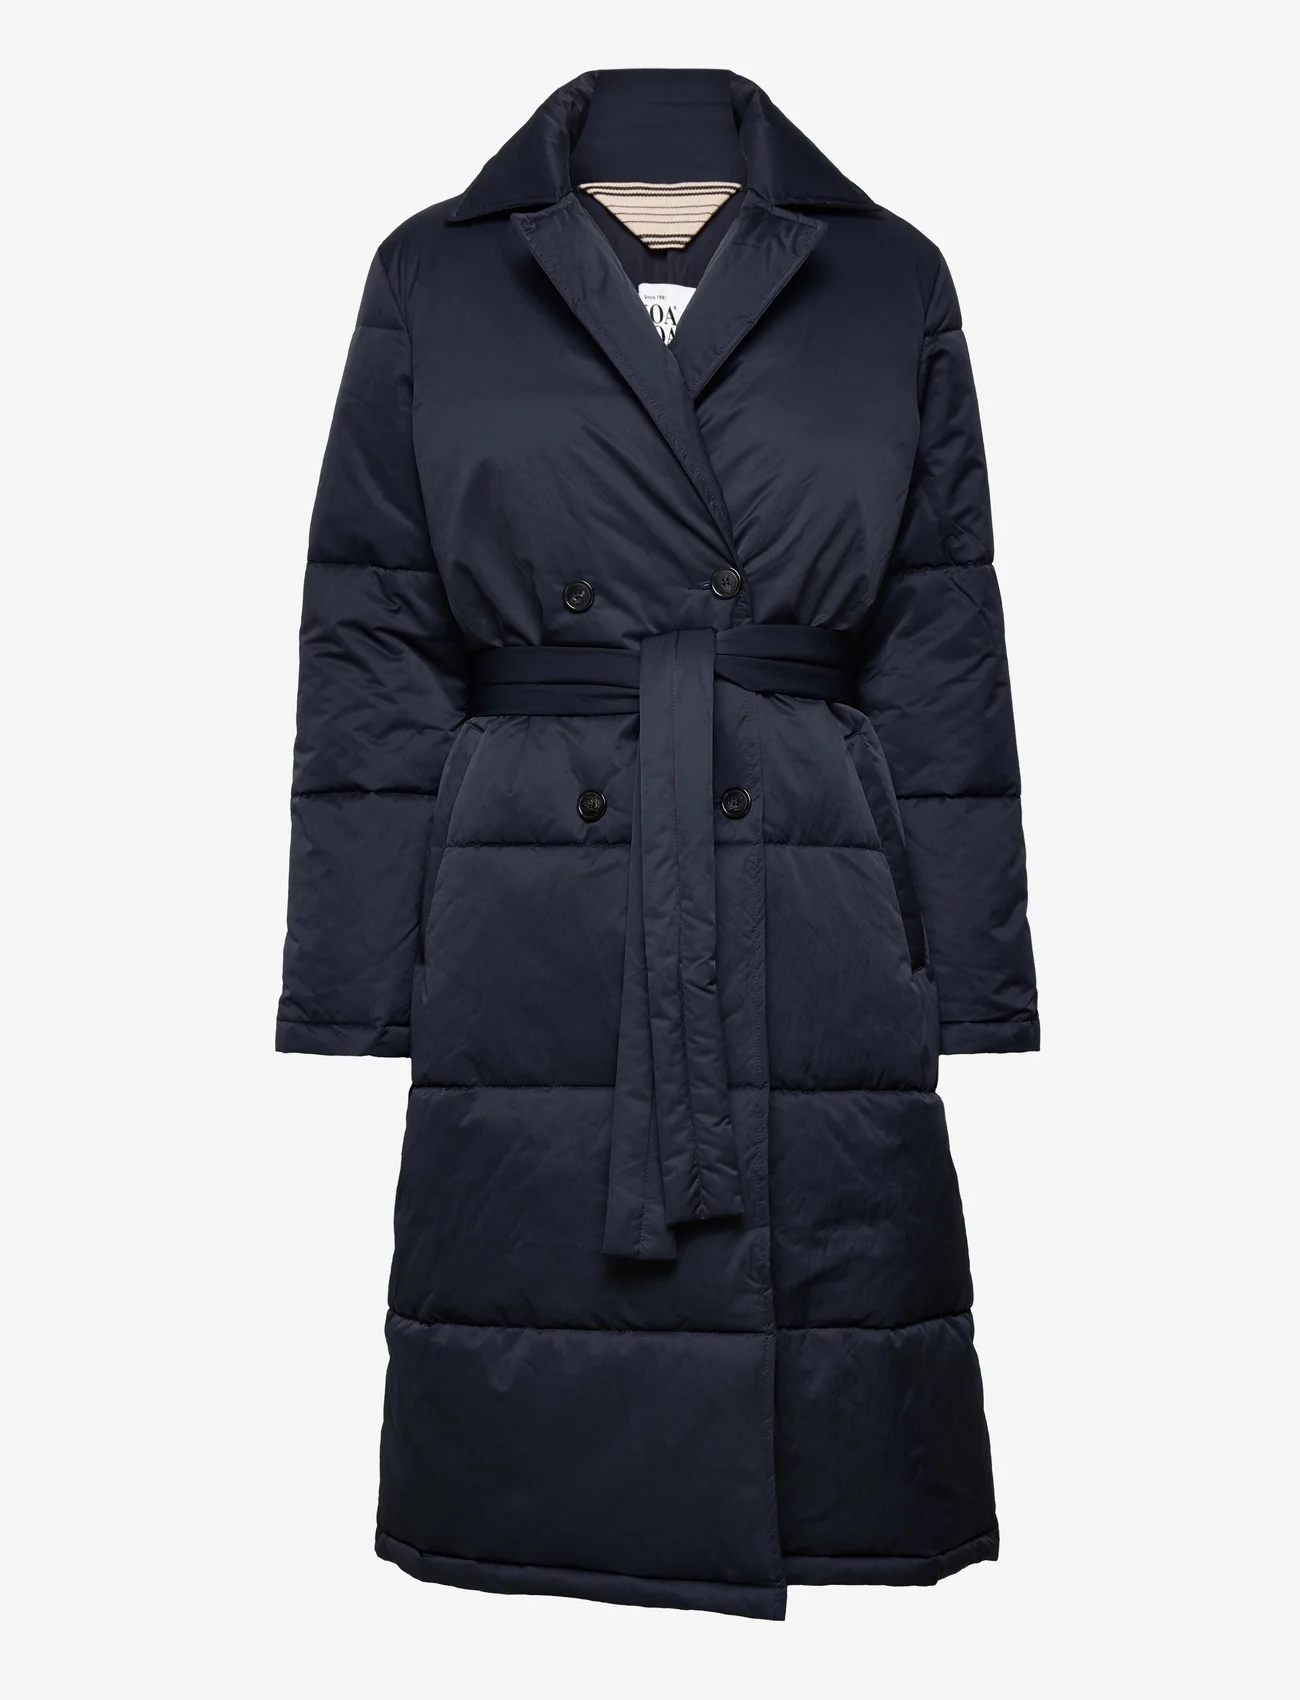 Noa Noa - Heavy outerwear - winter jackets - dark navy - 0